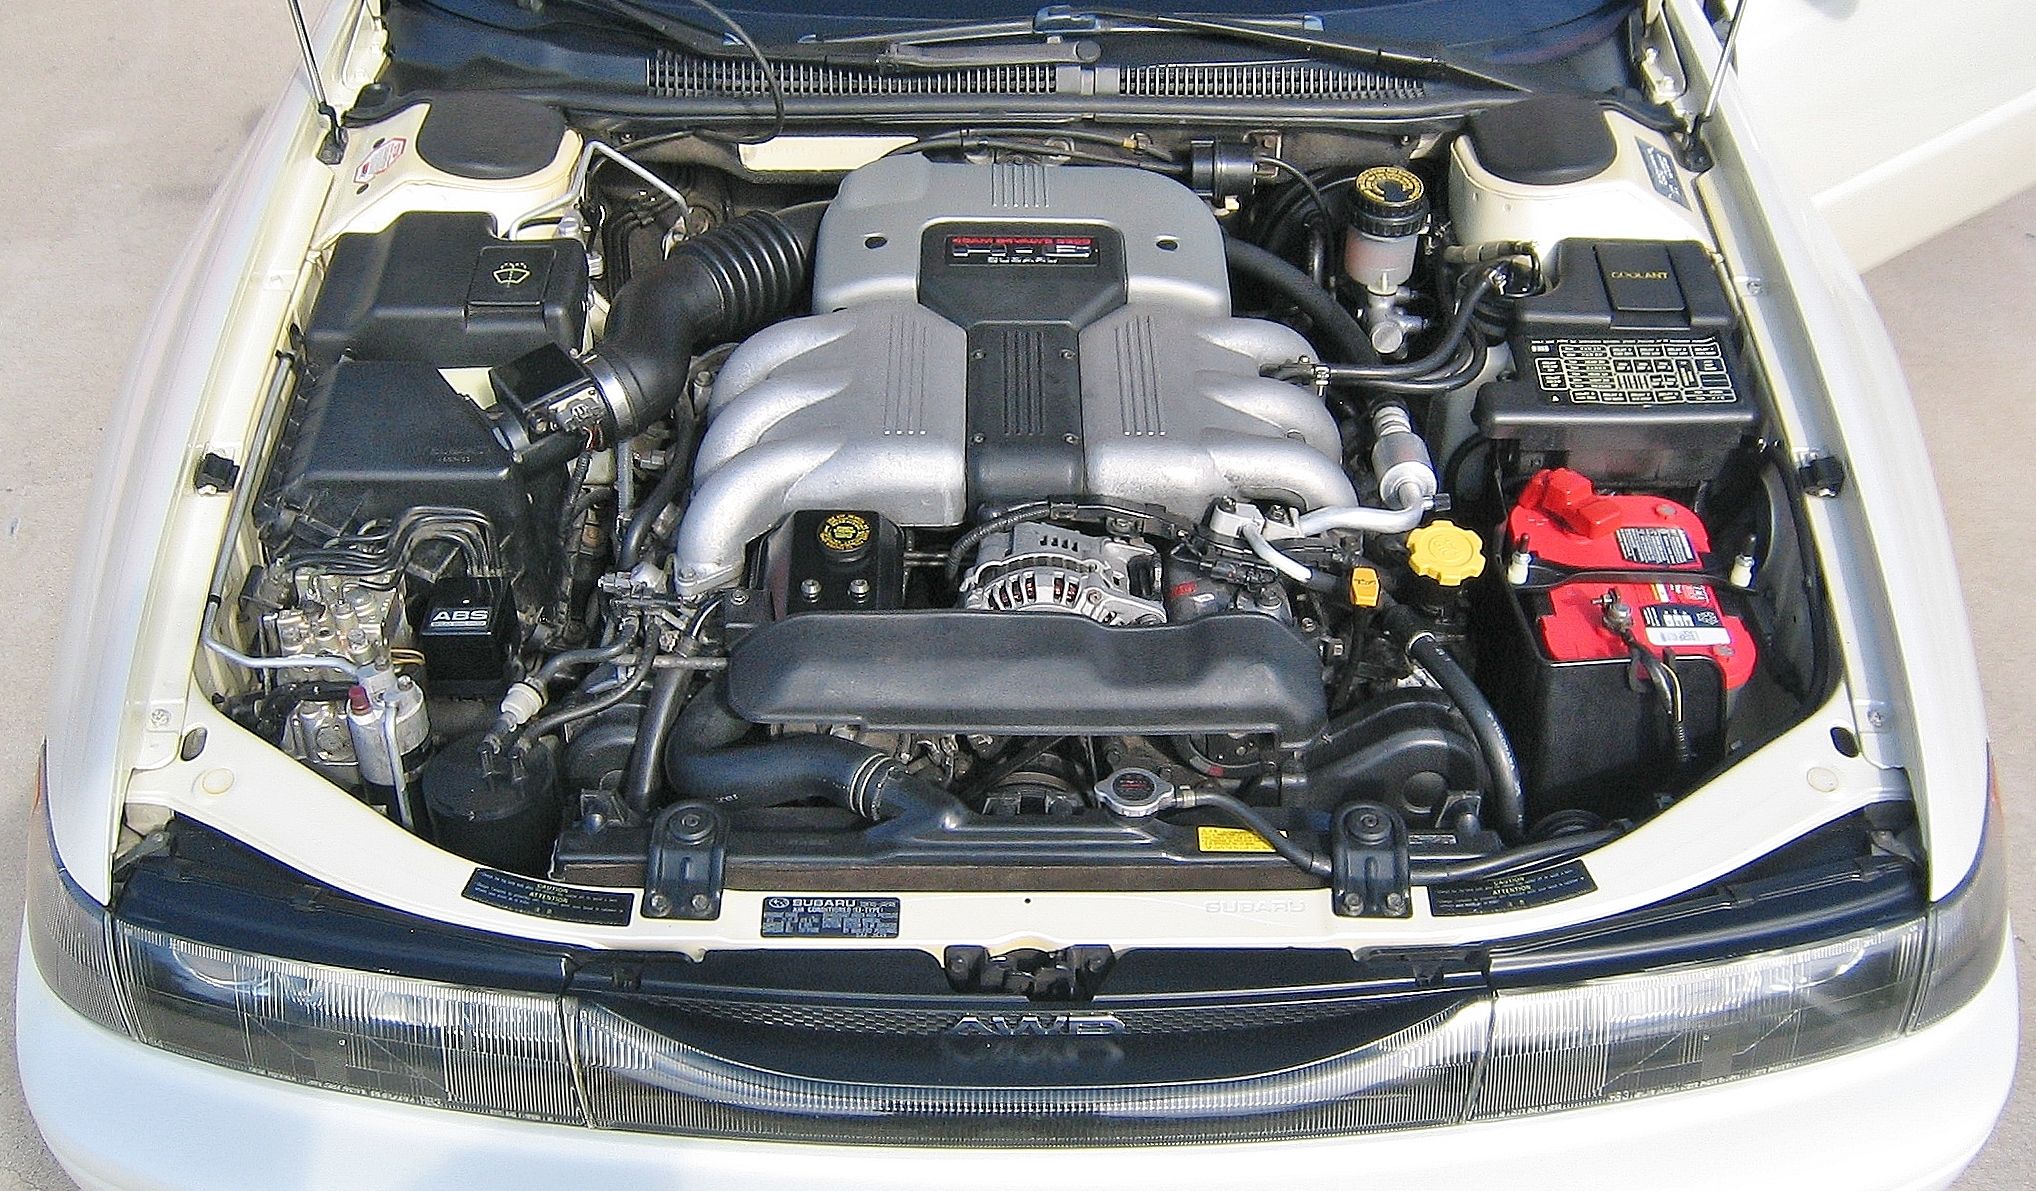 Subaru SVX engine, EG33